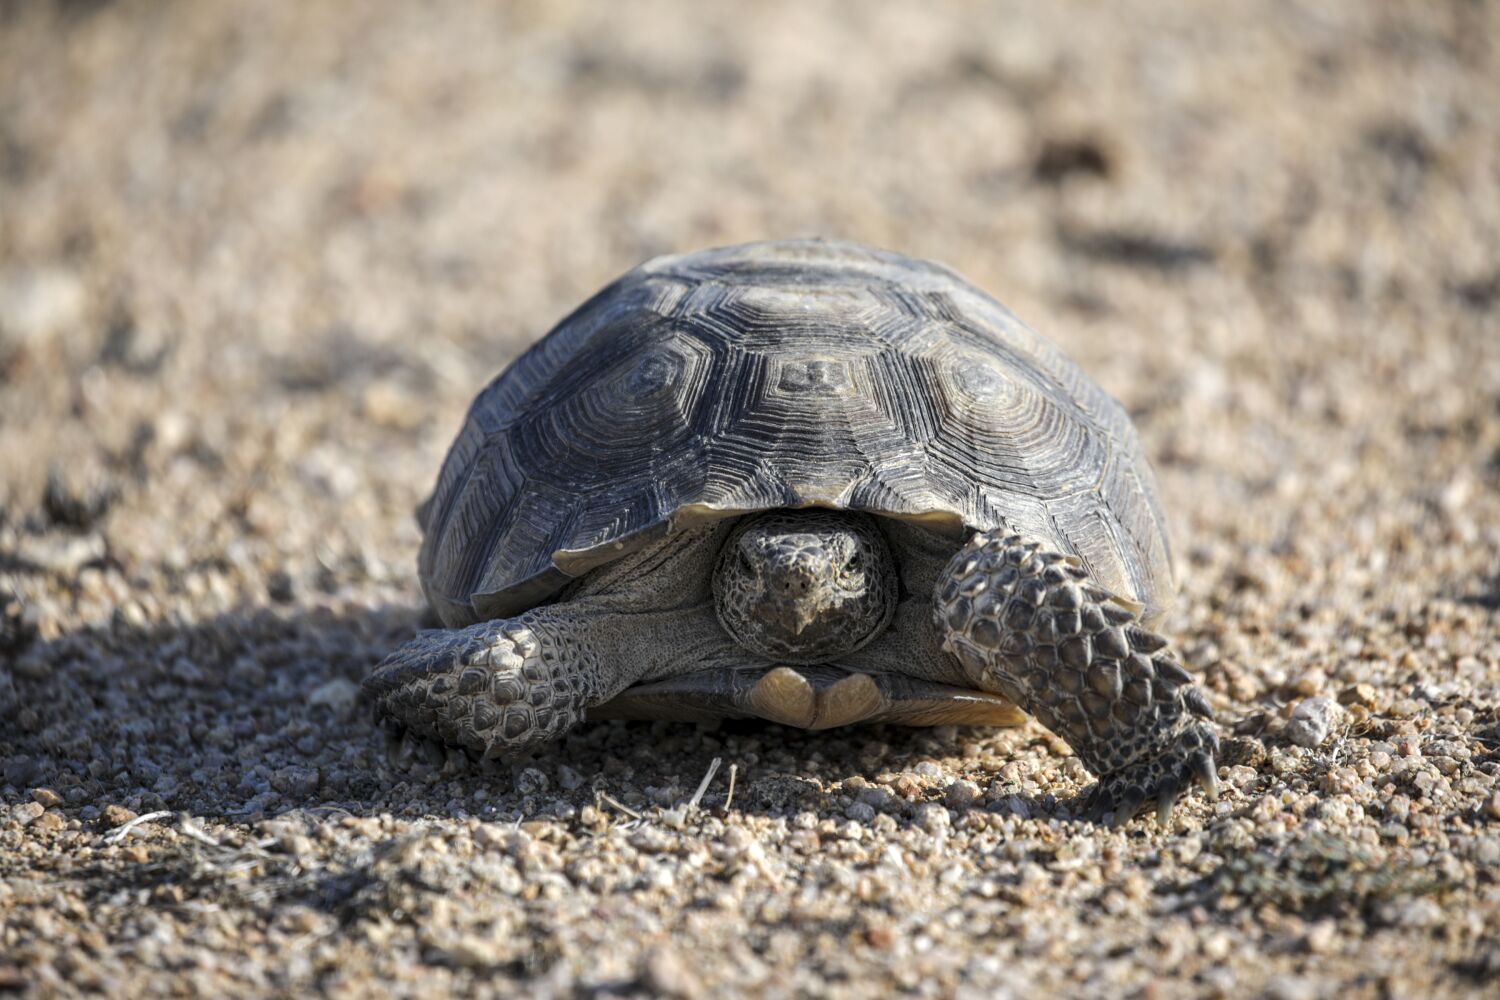 California's Mojave desert tortoises move toward extinction. Why saving them is so hard